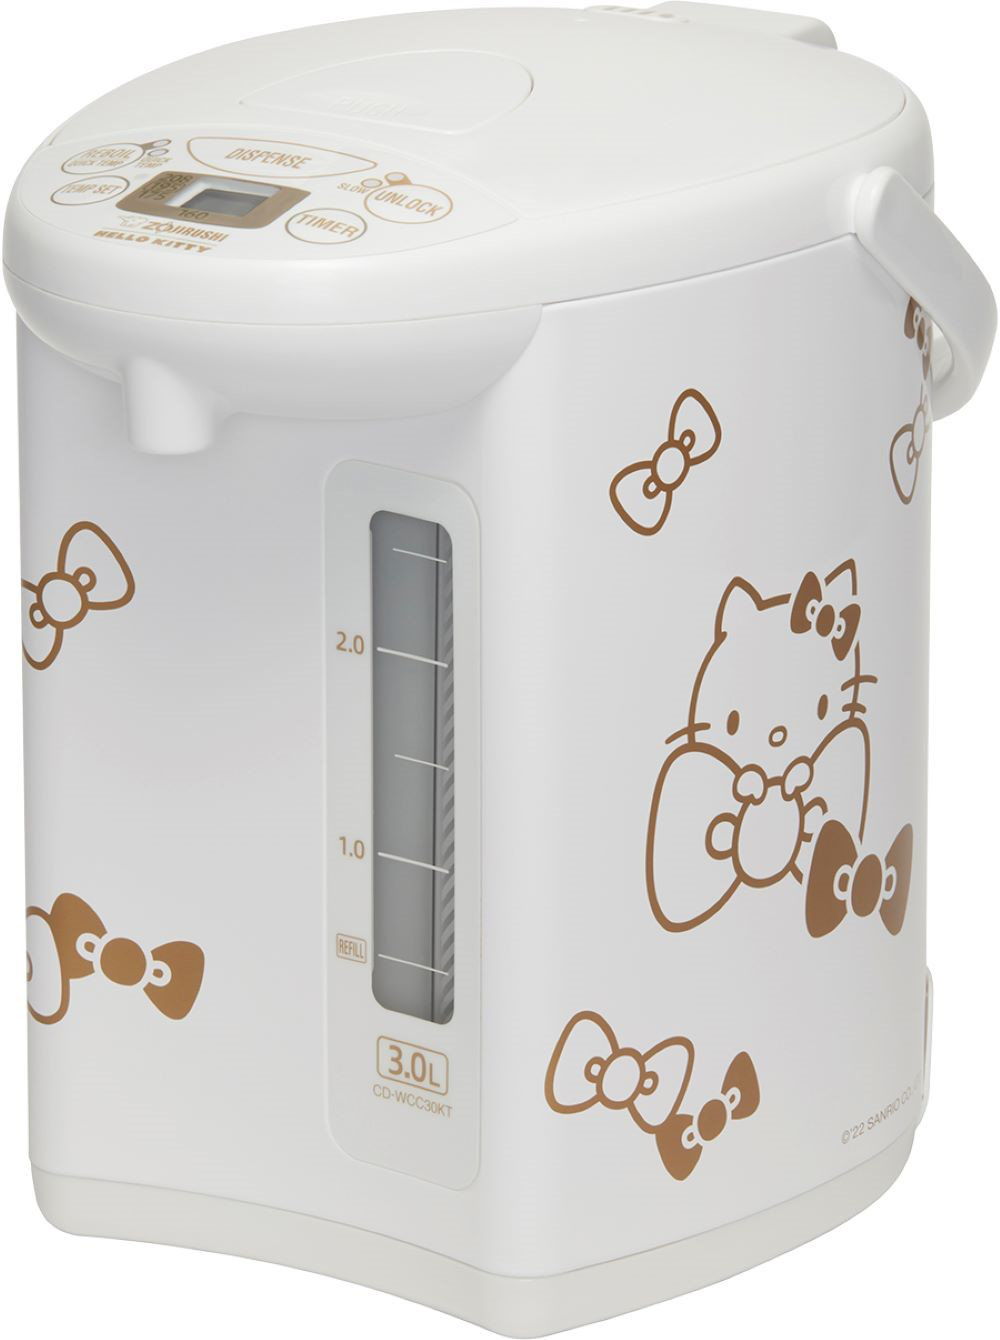 Hello Kitty Zojirushi Automatic Rice Cooker & Warmer, 1.0-Liter